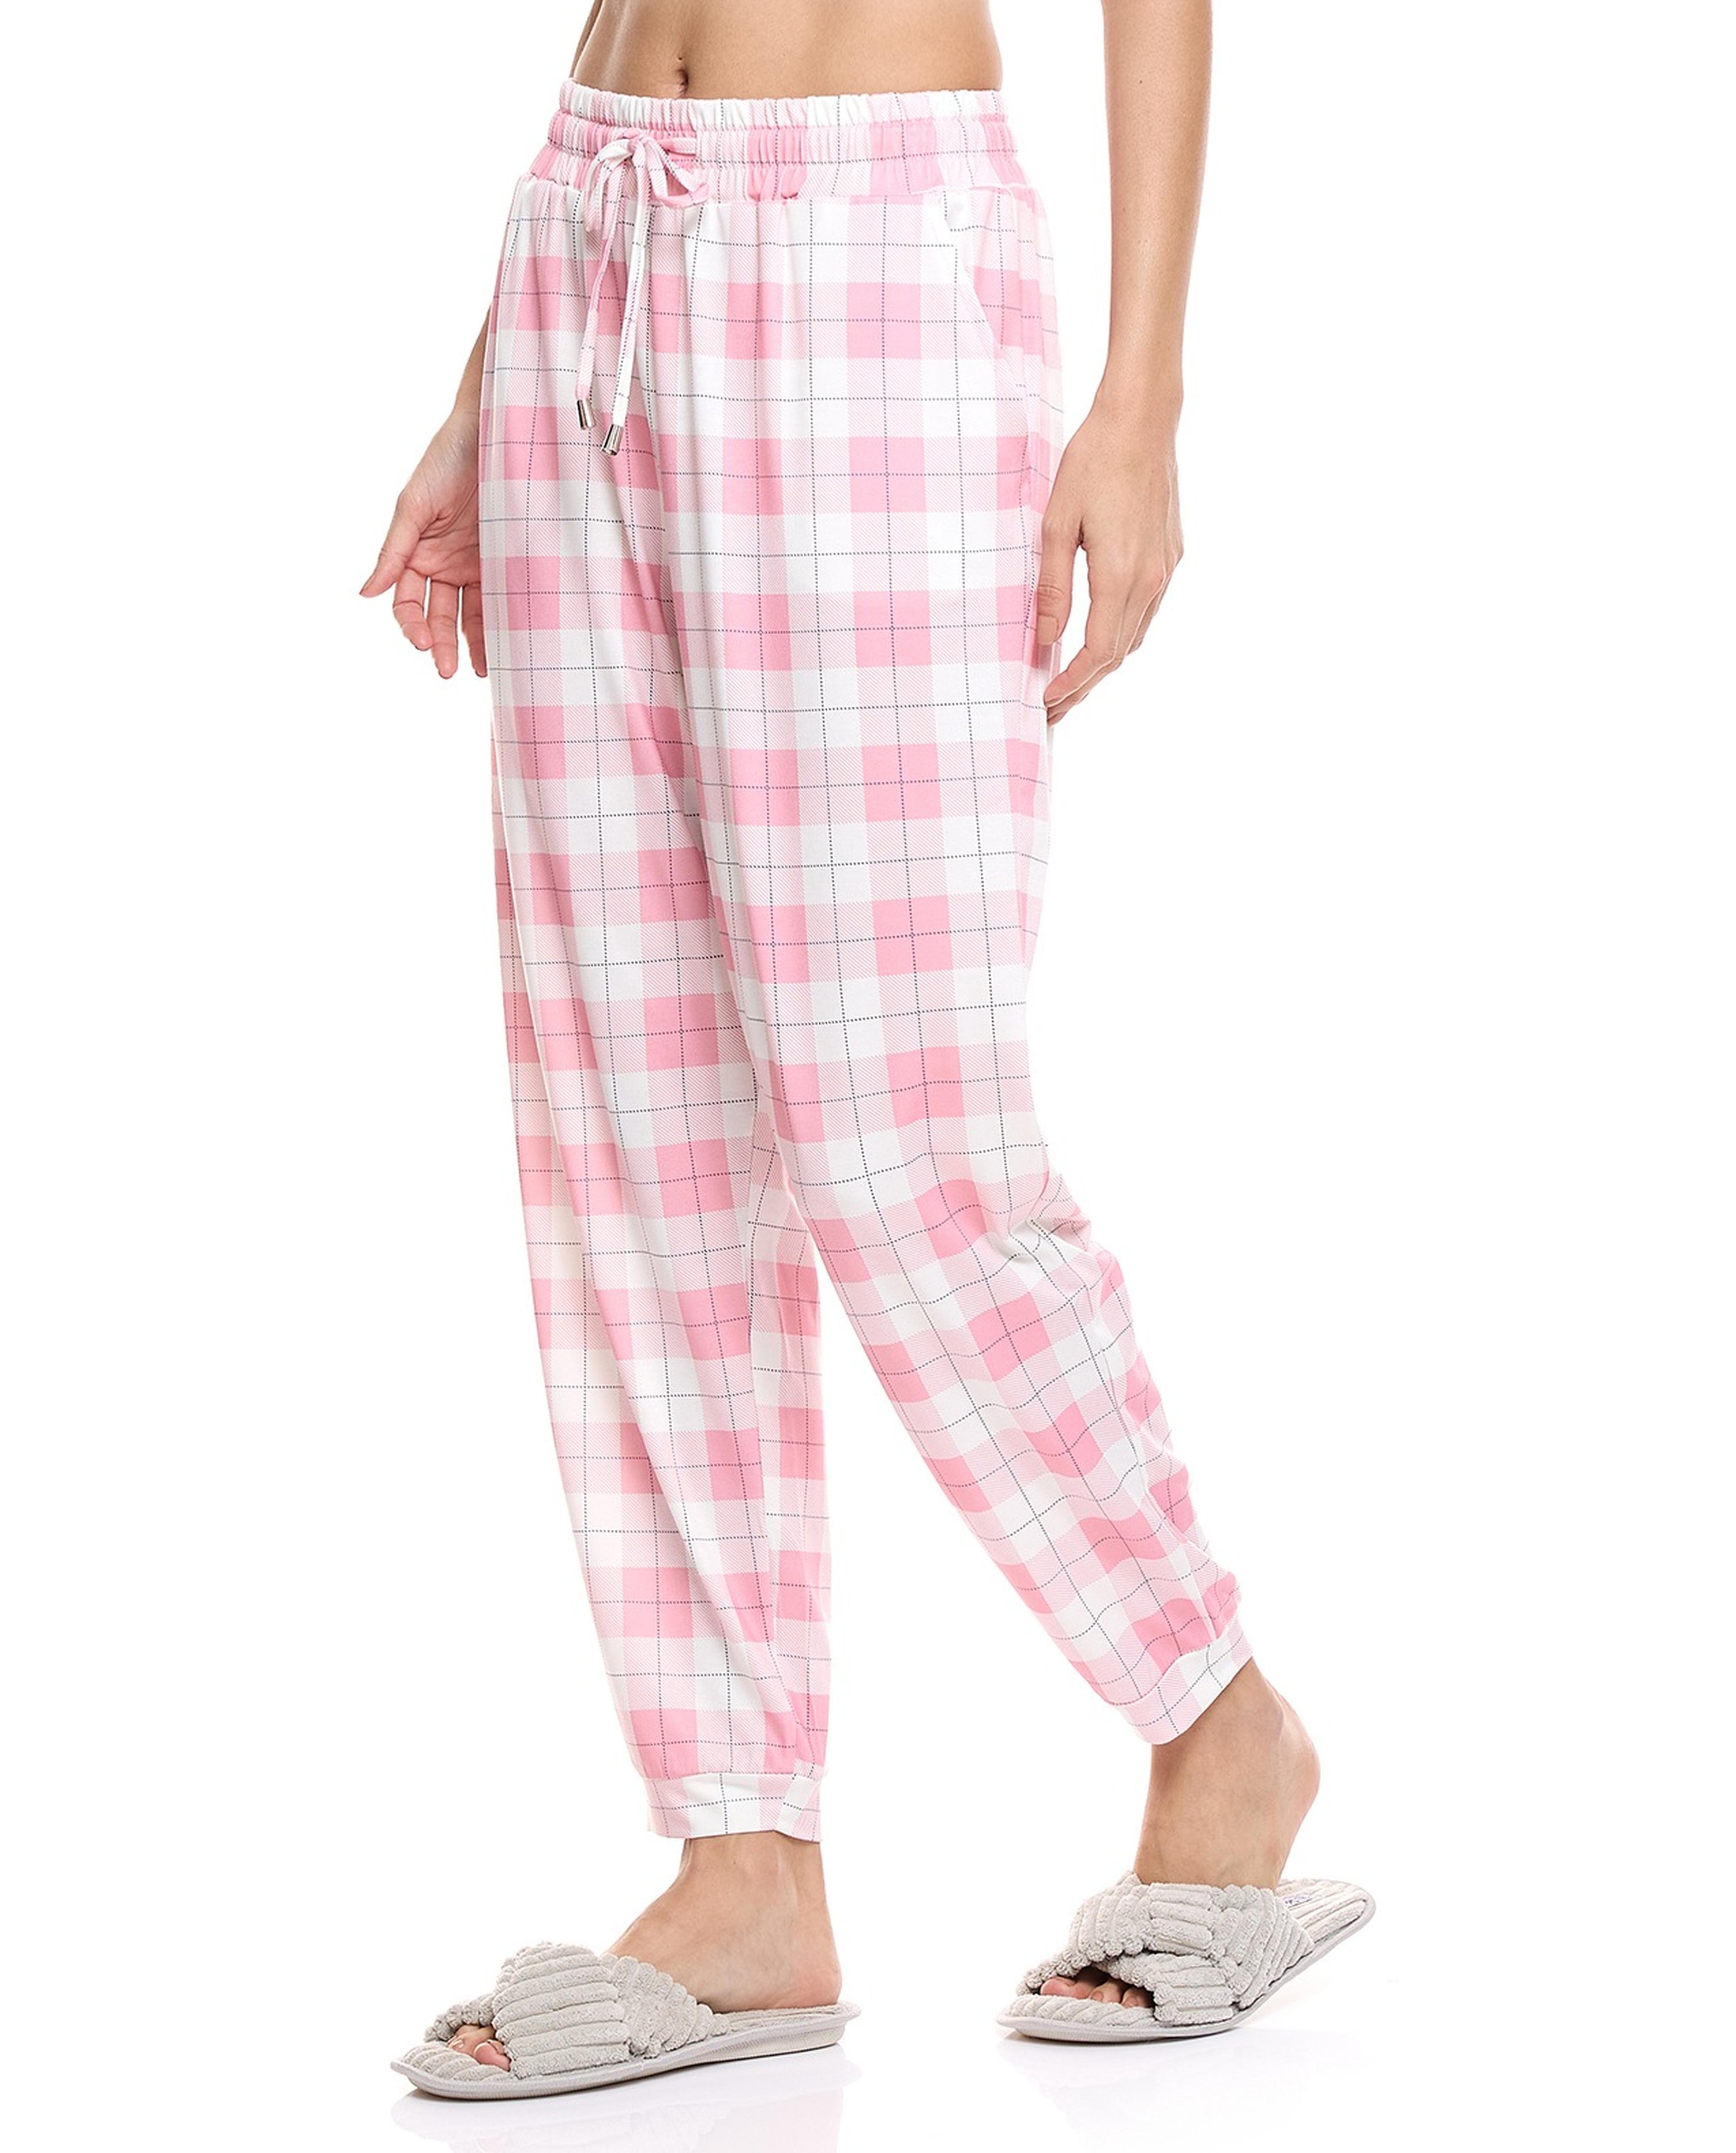 Plaid Patterned Pajama Pants with Drawstring Waist